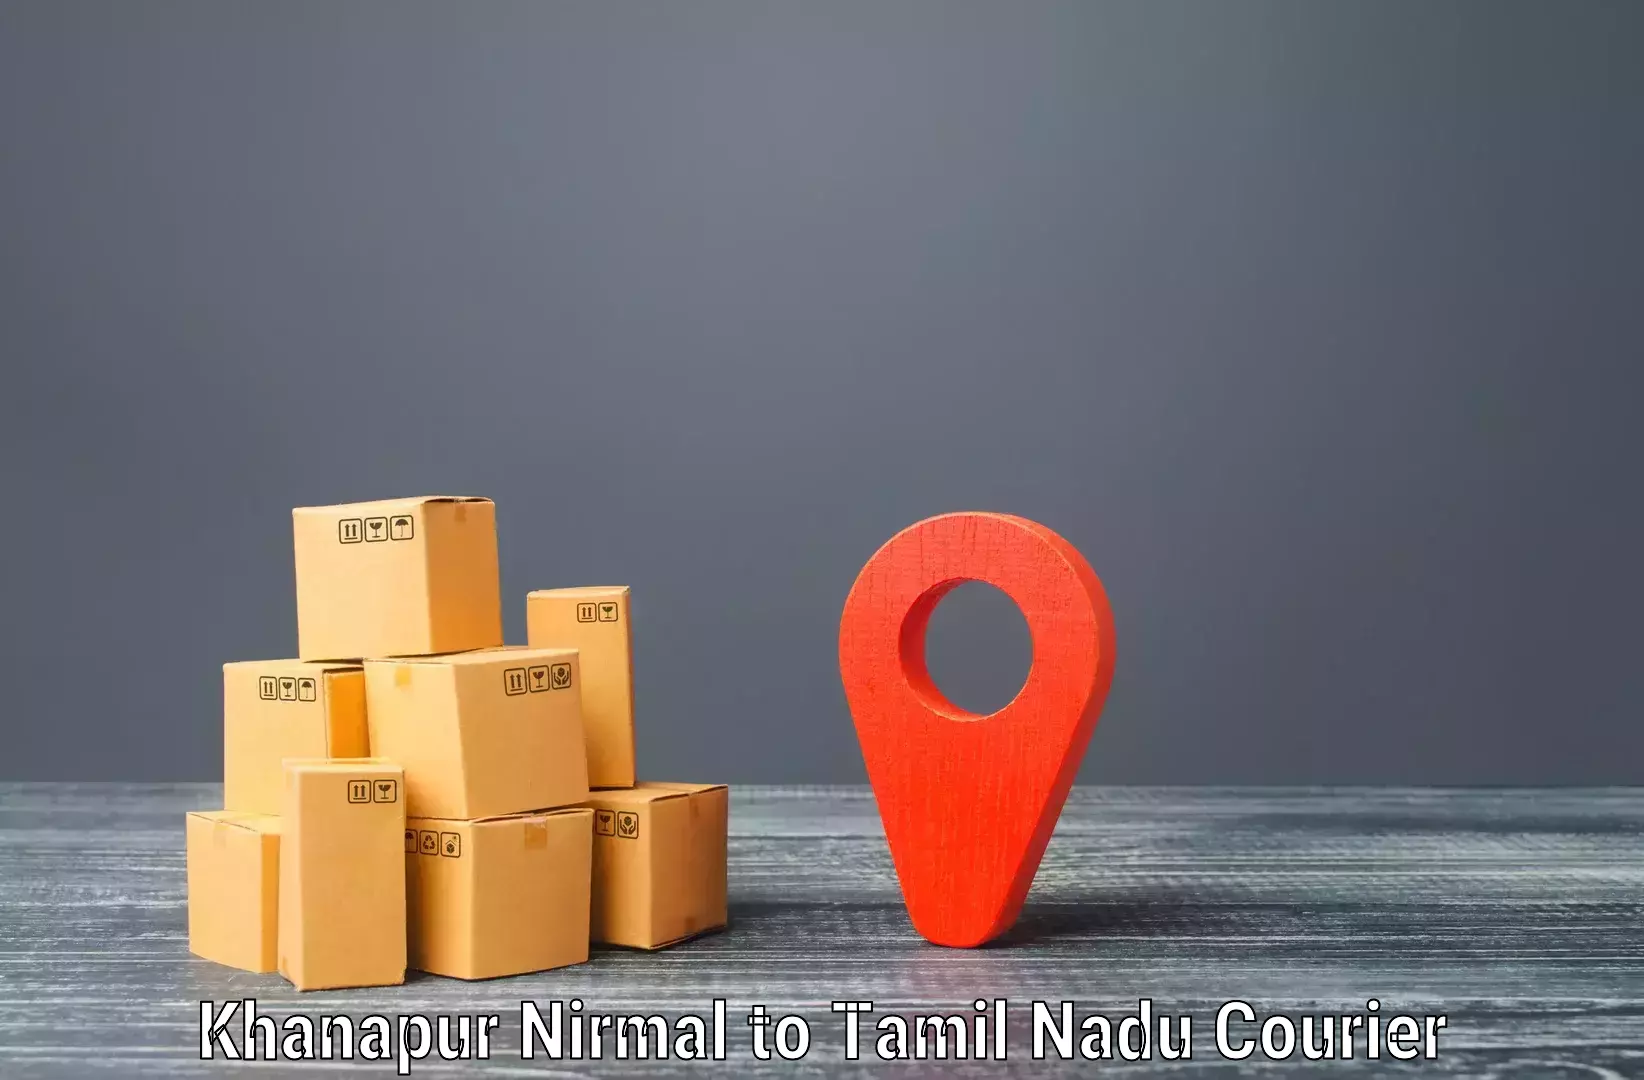 Express delivery network Khanapur Nirmal to Thuckalay